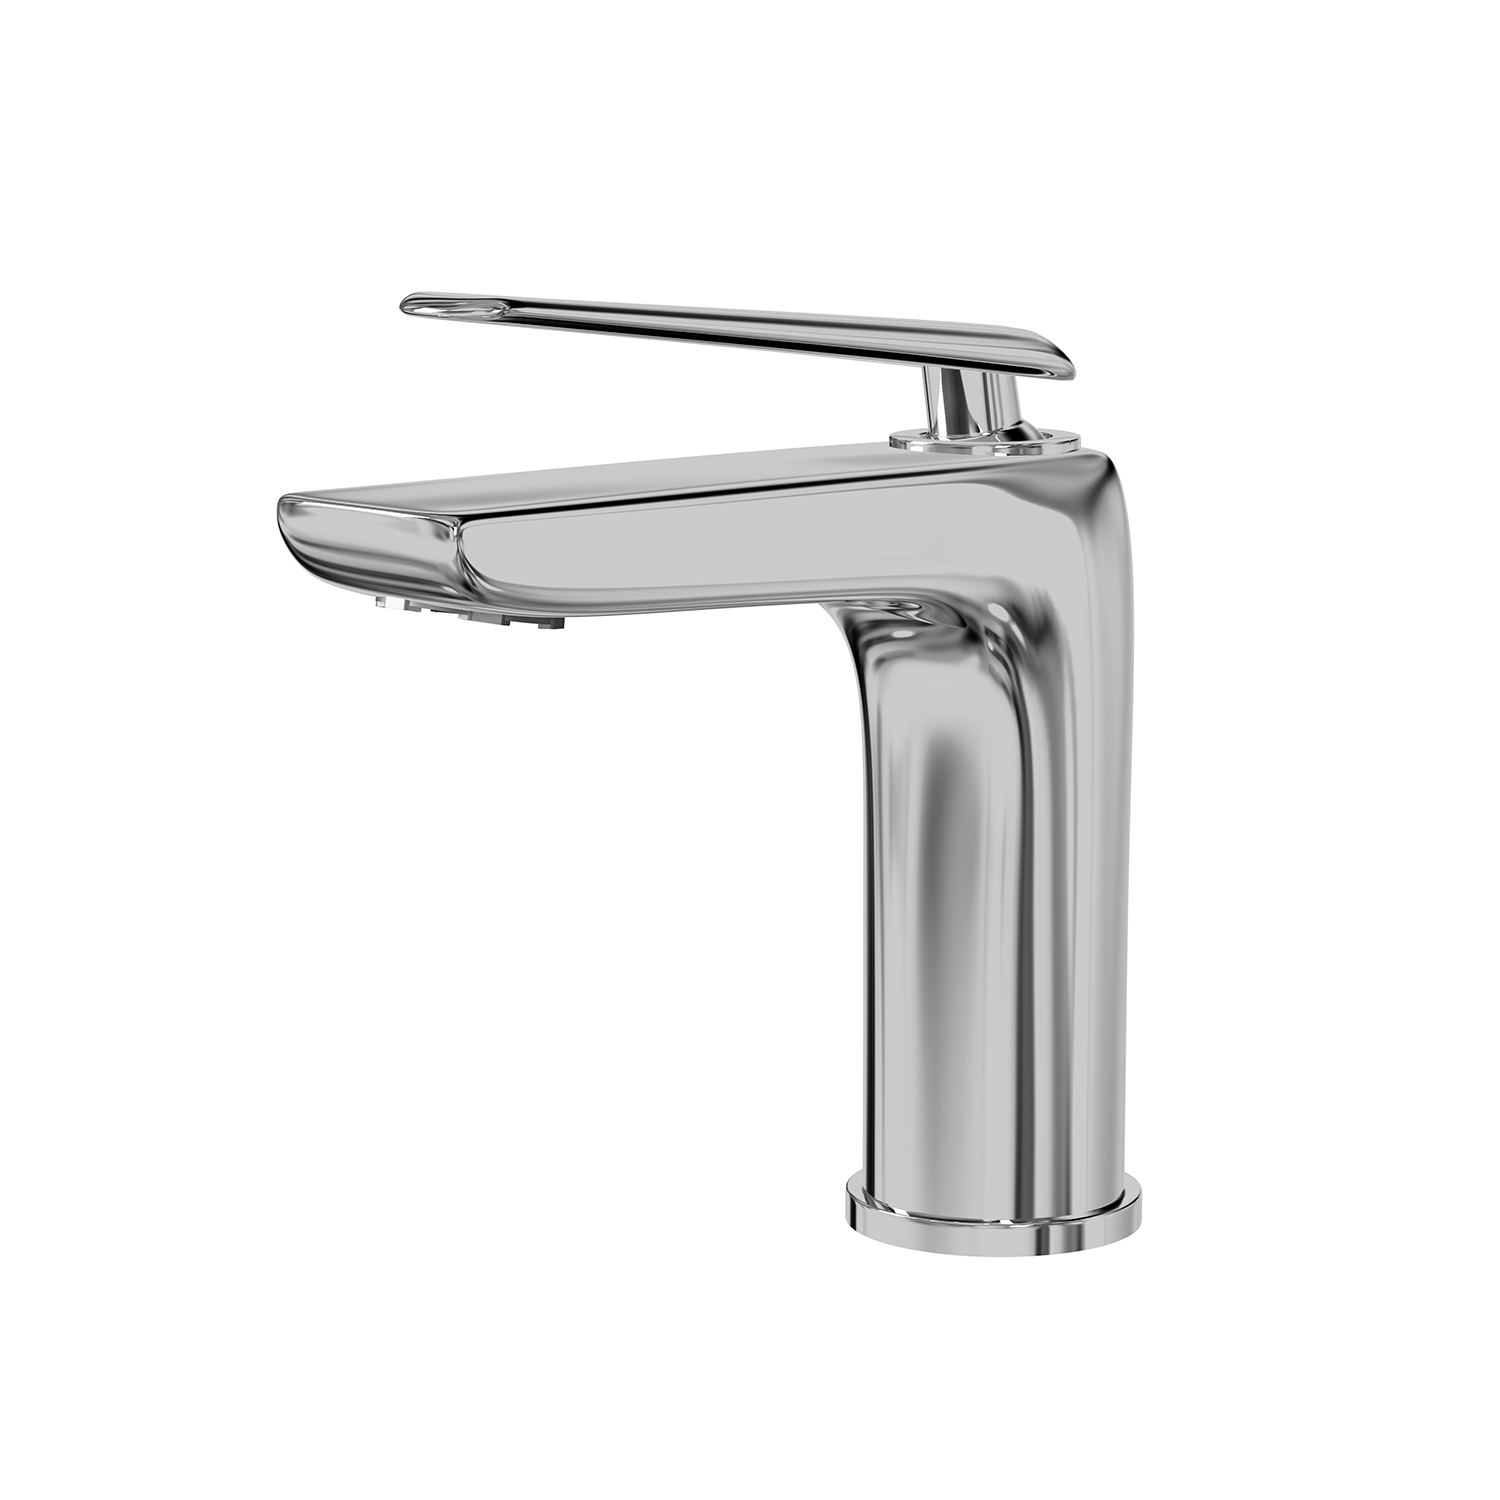 DAX Single Handle Bathroom Faucet, Brass Body, Chrome Finish, 4-3/4 x 6-1/8 Inches (DAX-8206)